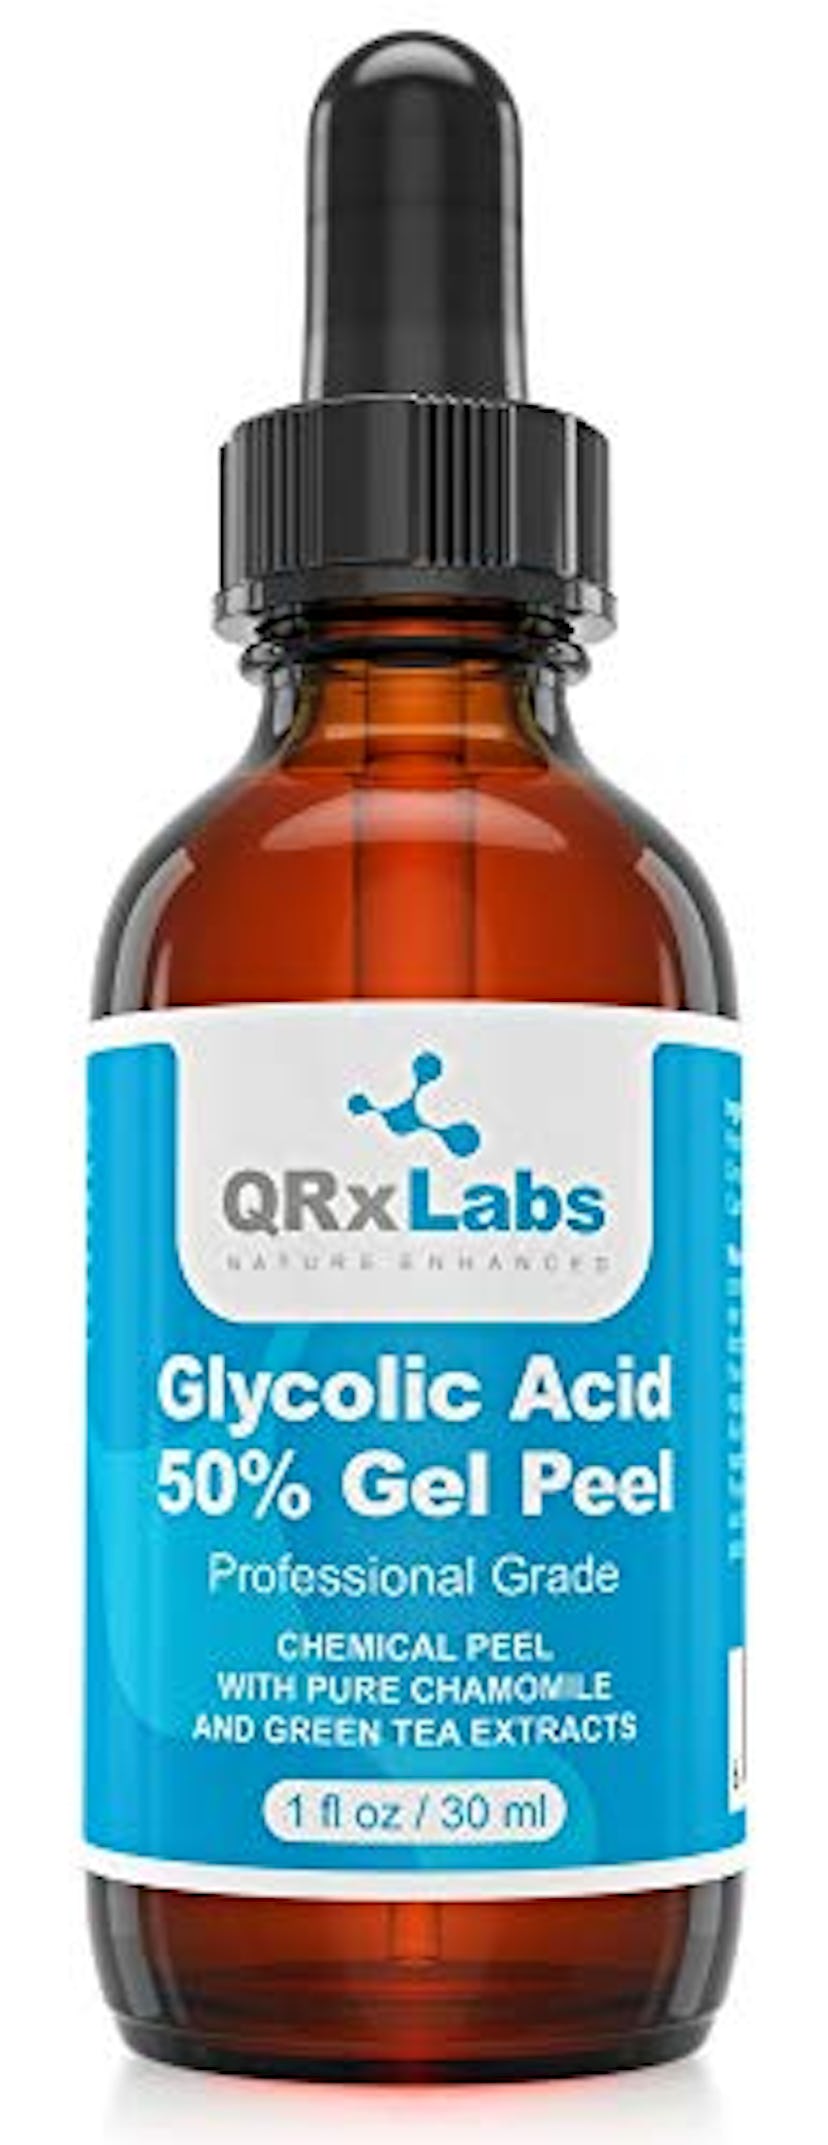 QRx Labs Glycolic Acid Gel Peel